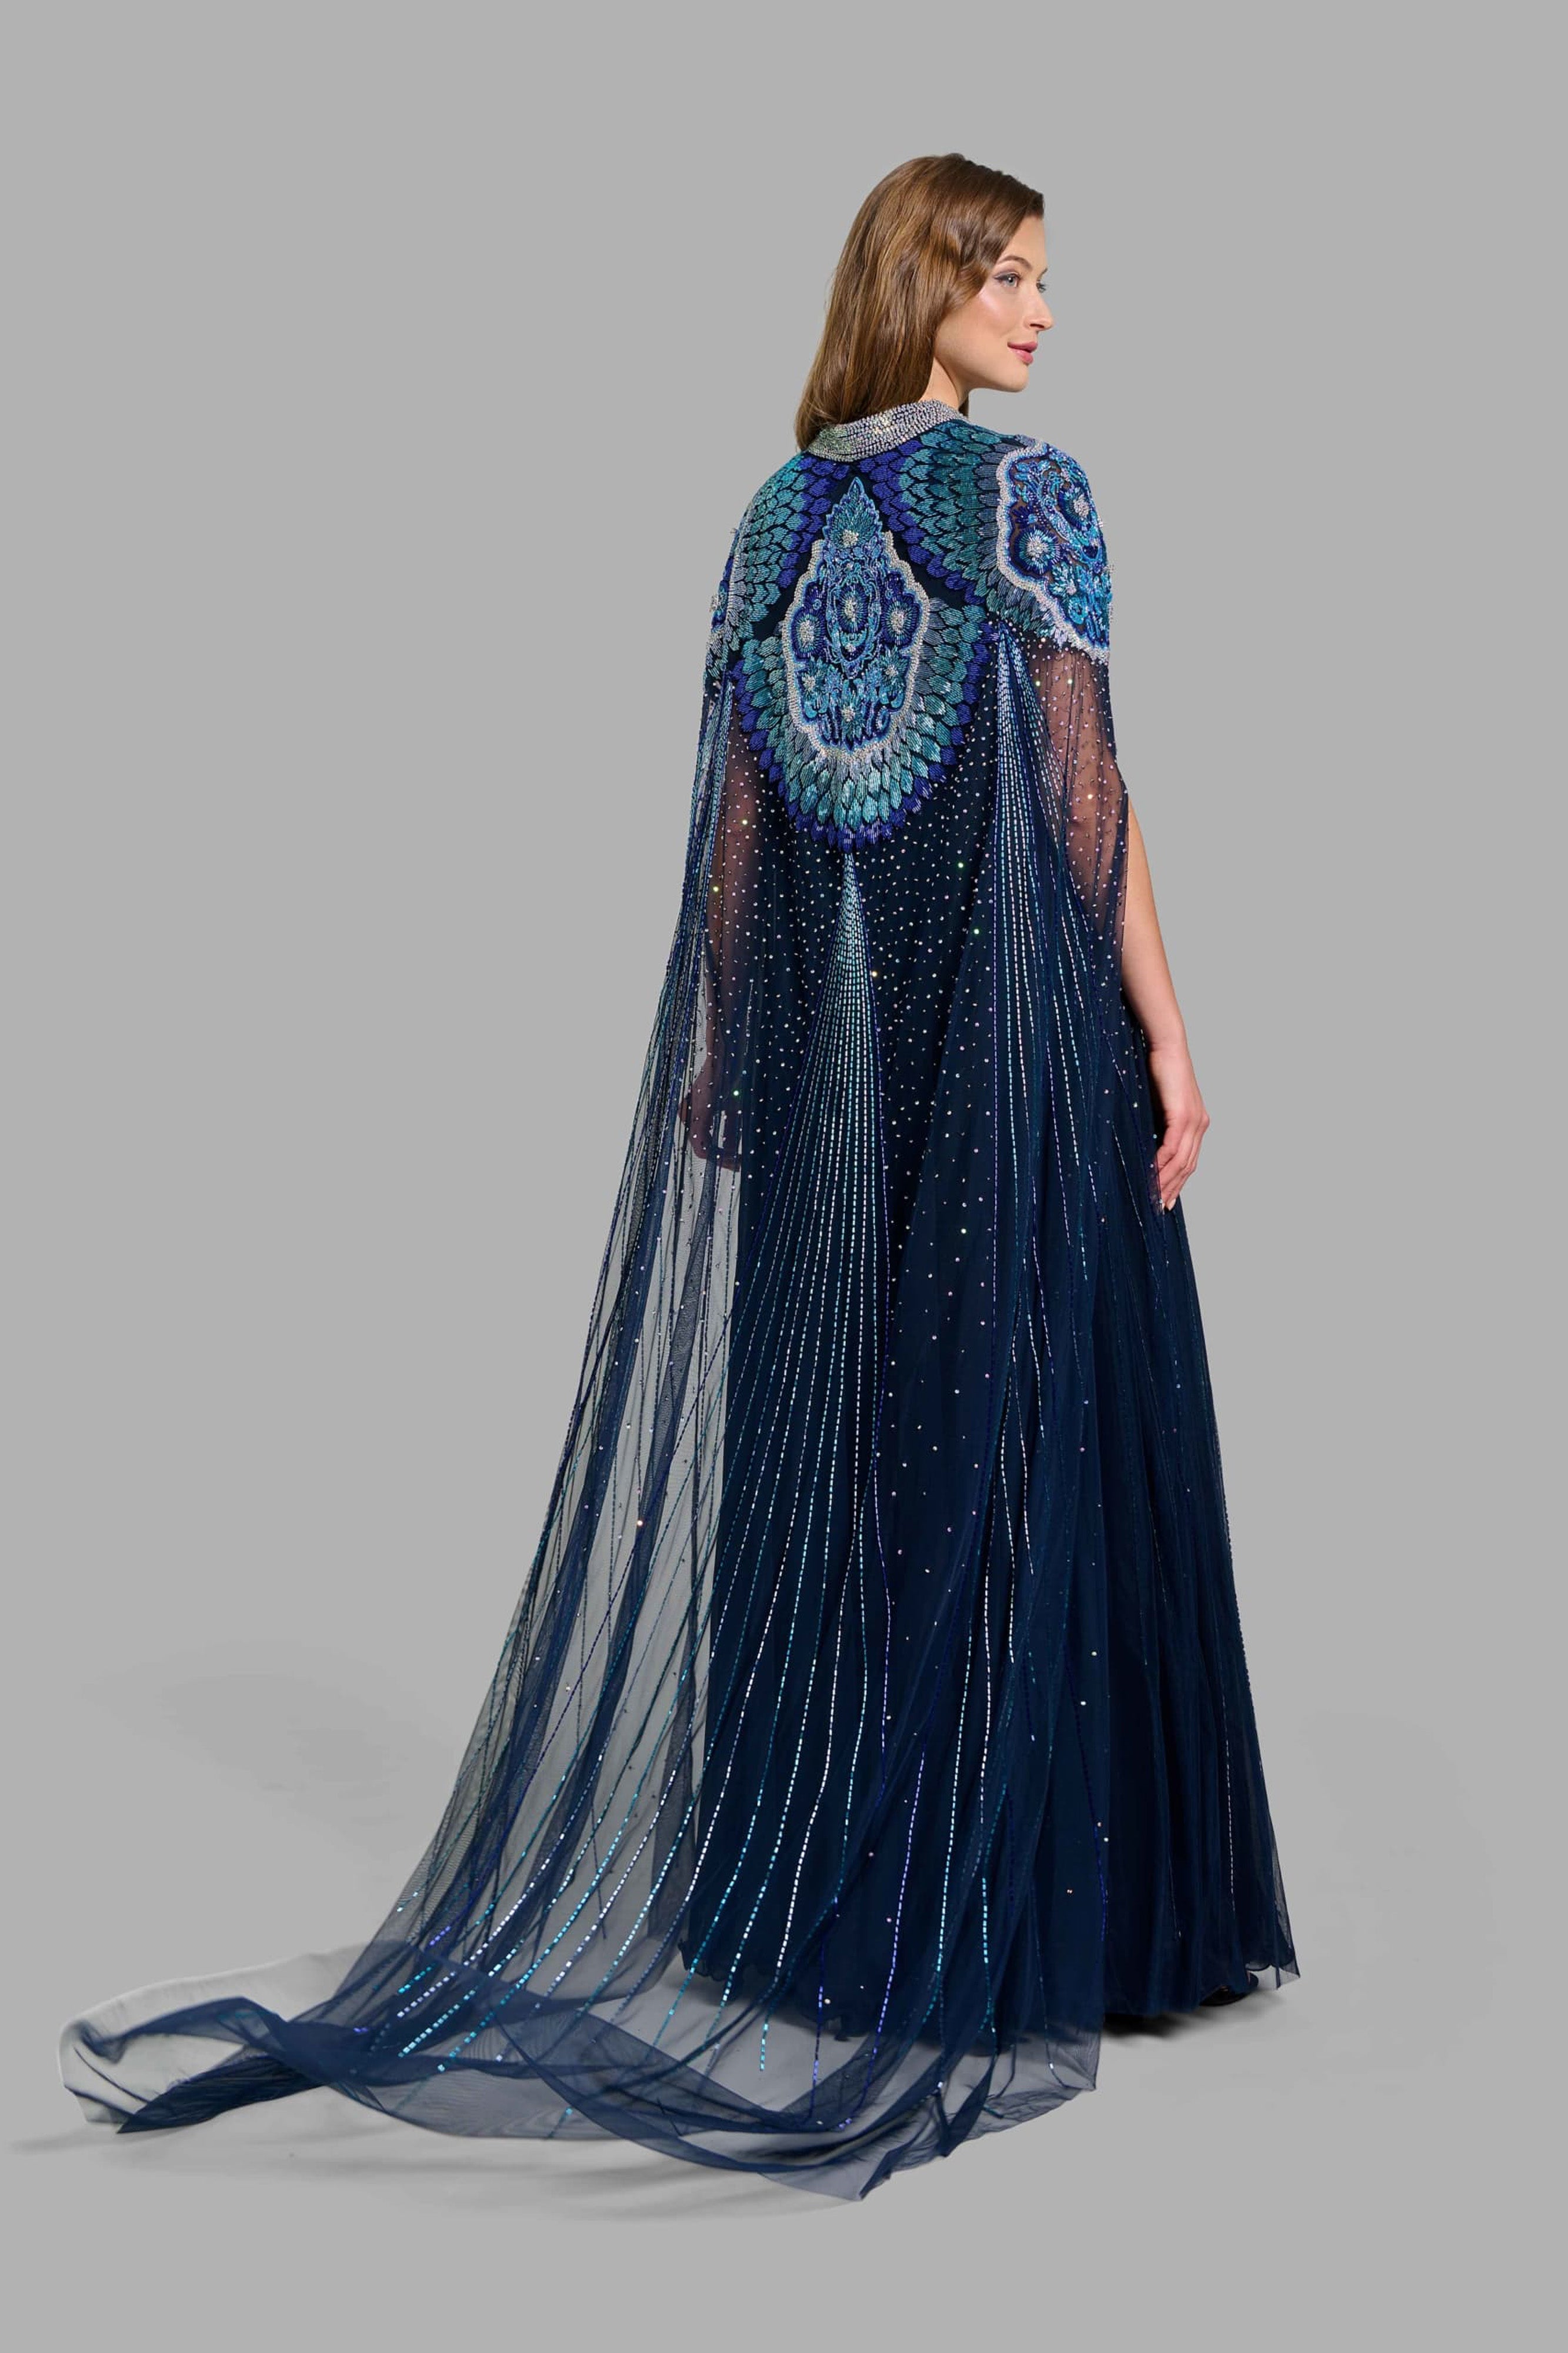 The Peacock Dress